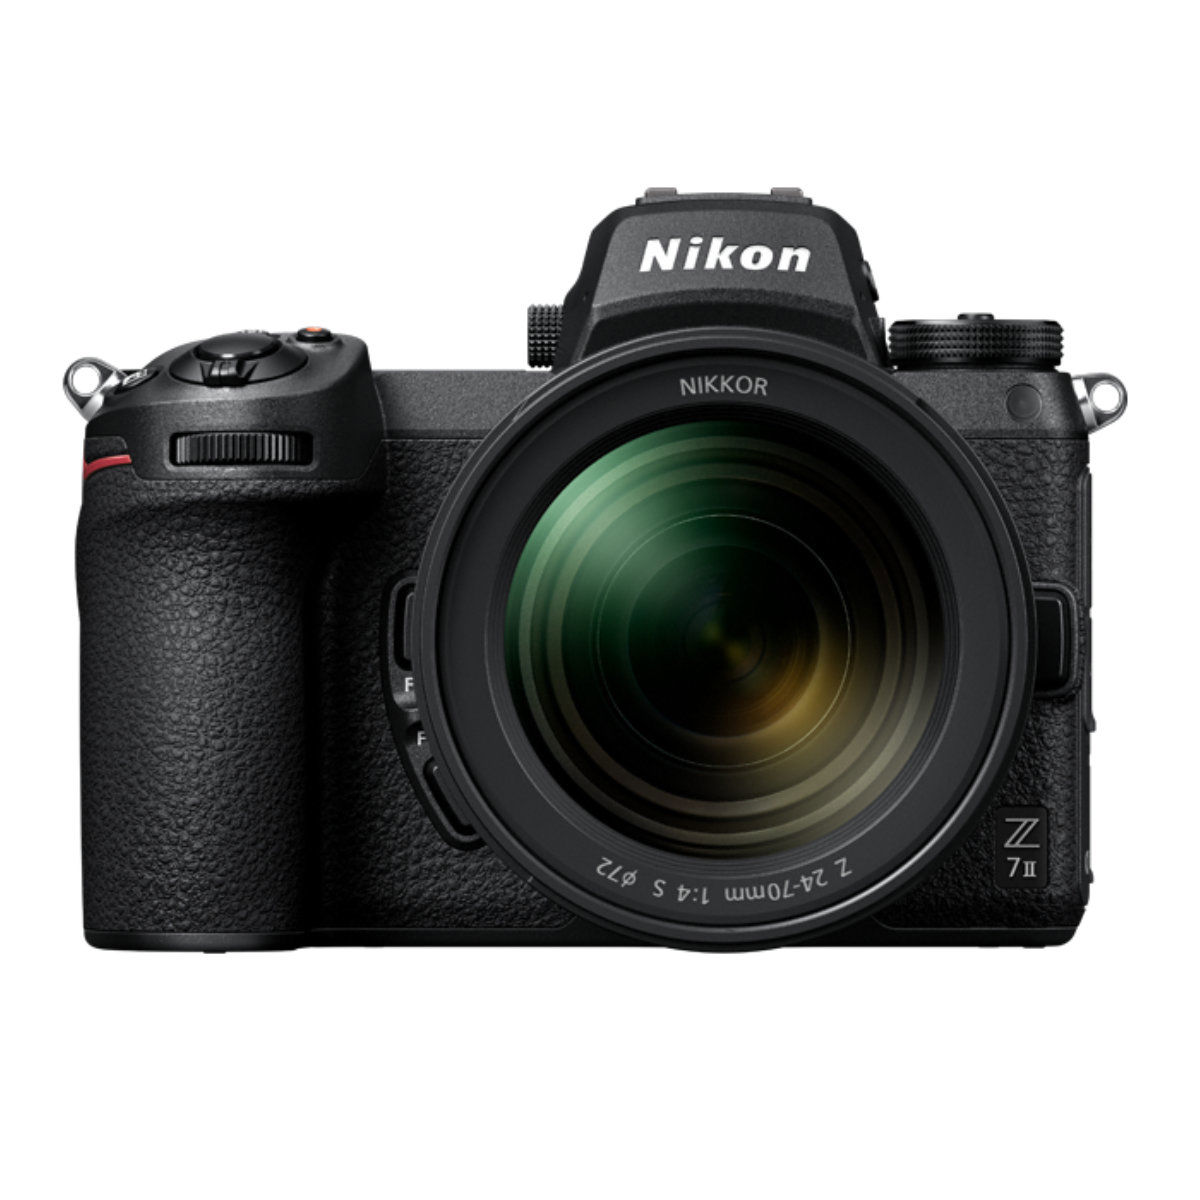 Nikon Z7 II with 24-70mm f/4 S Lens